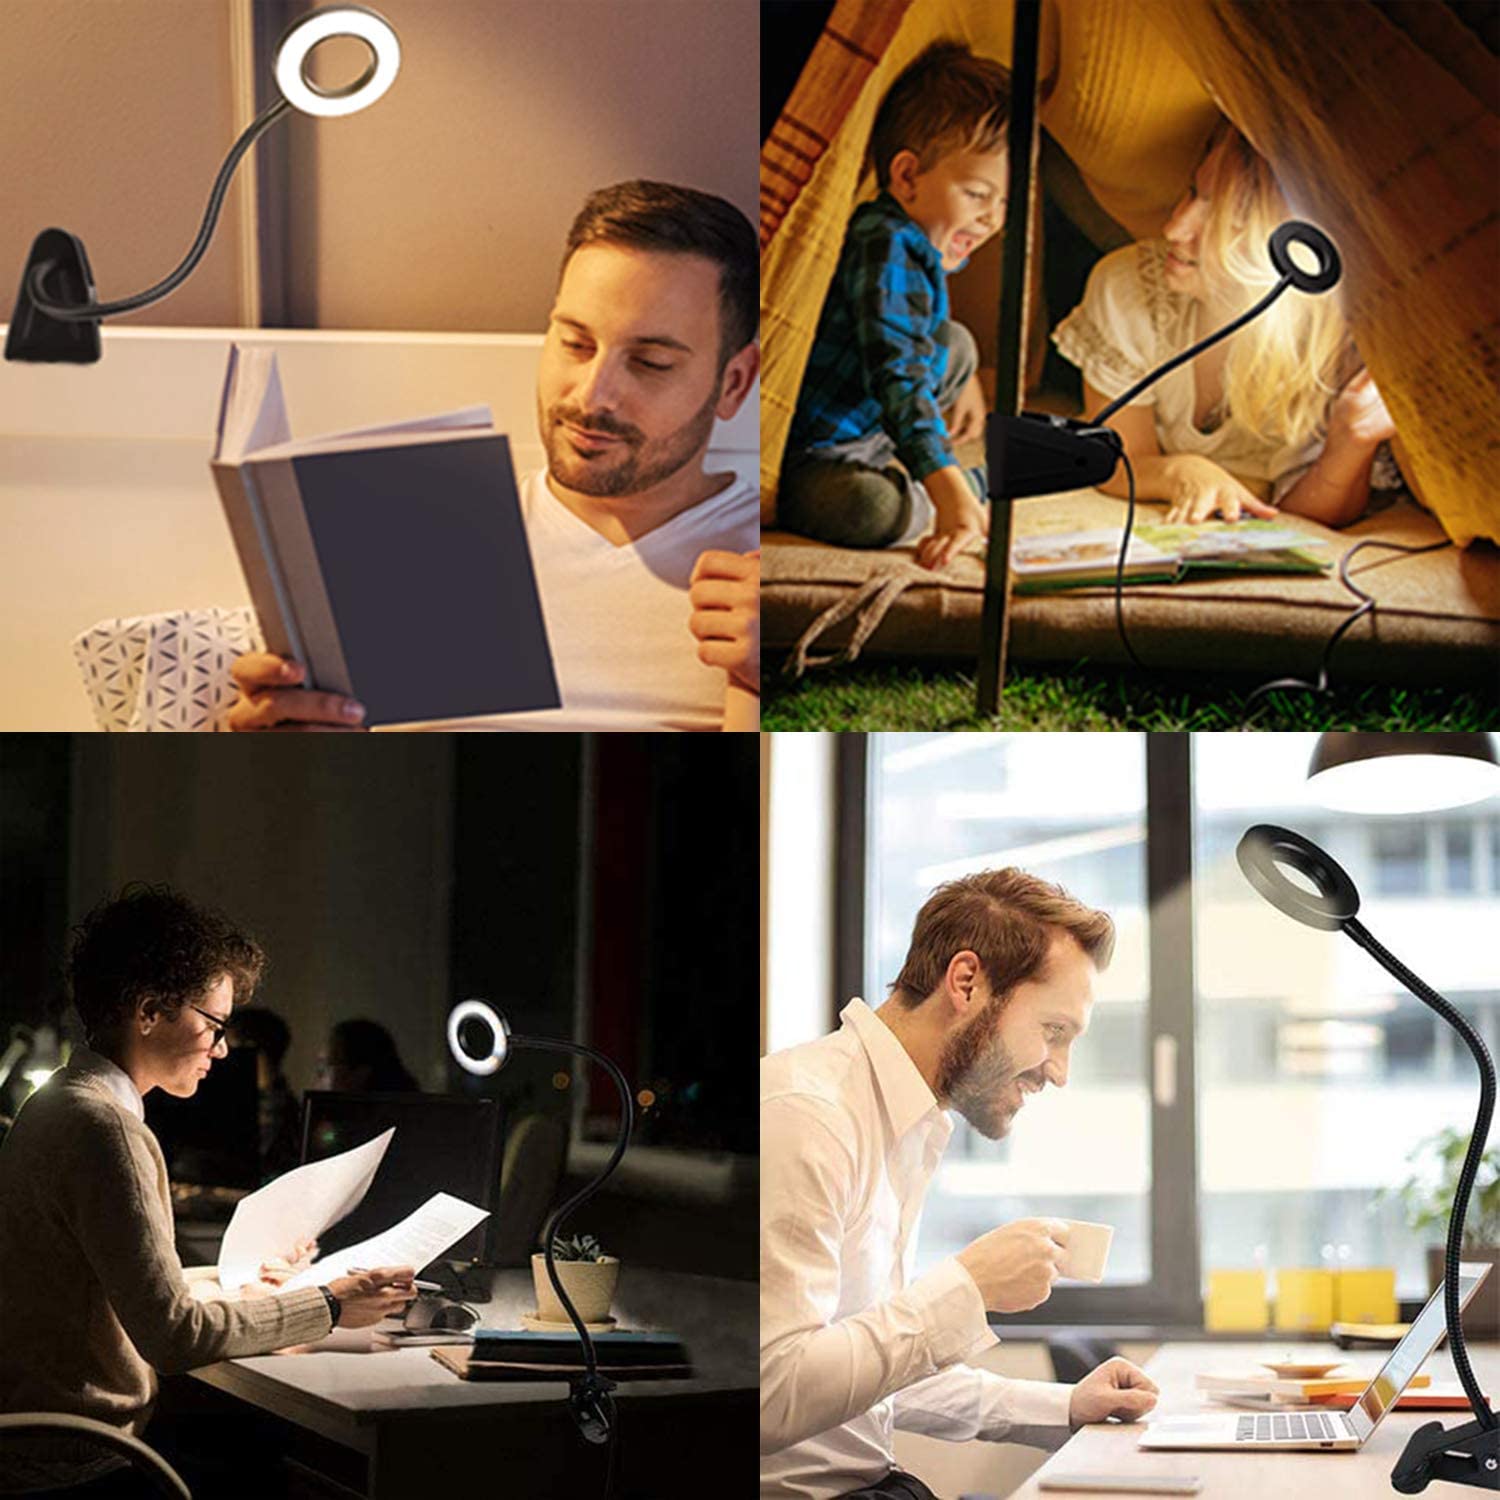 LED Desk Lamp, Clip on Lights with USB Charging Port, Eye Protection 3 Color 30 Brightness.